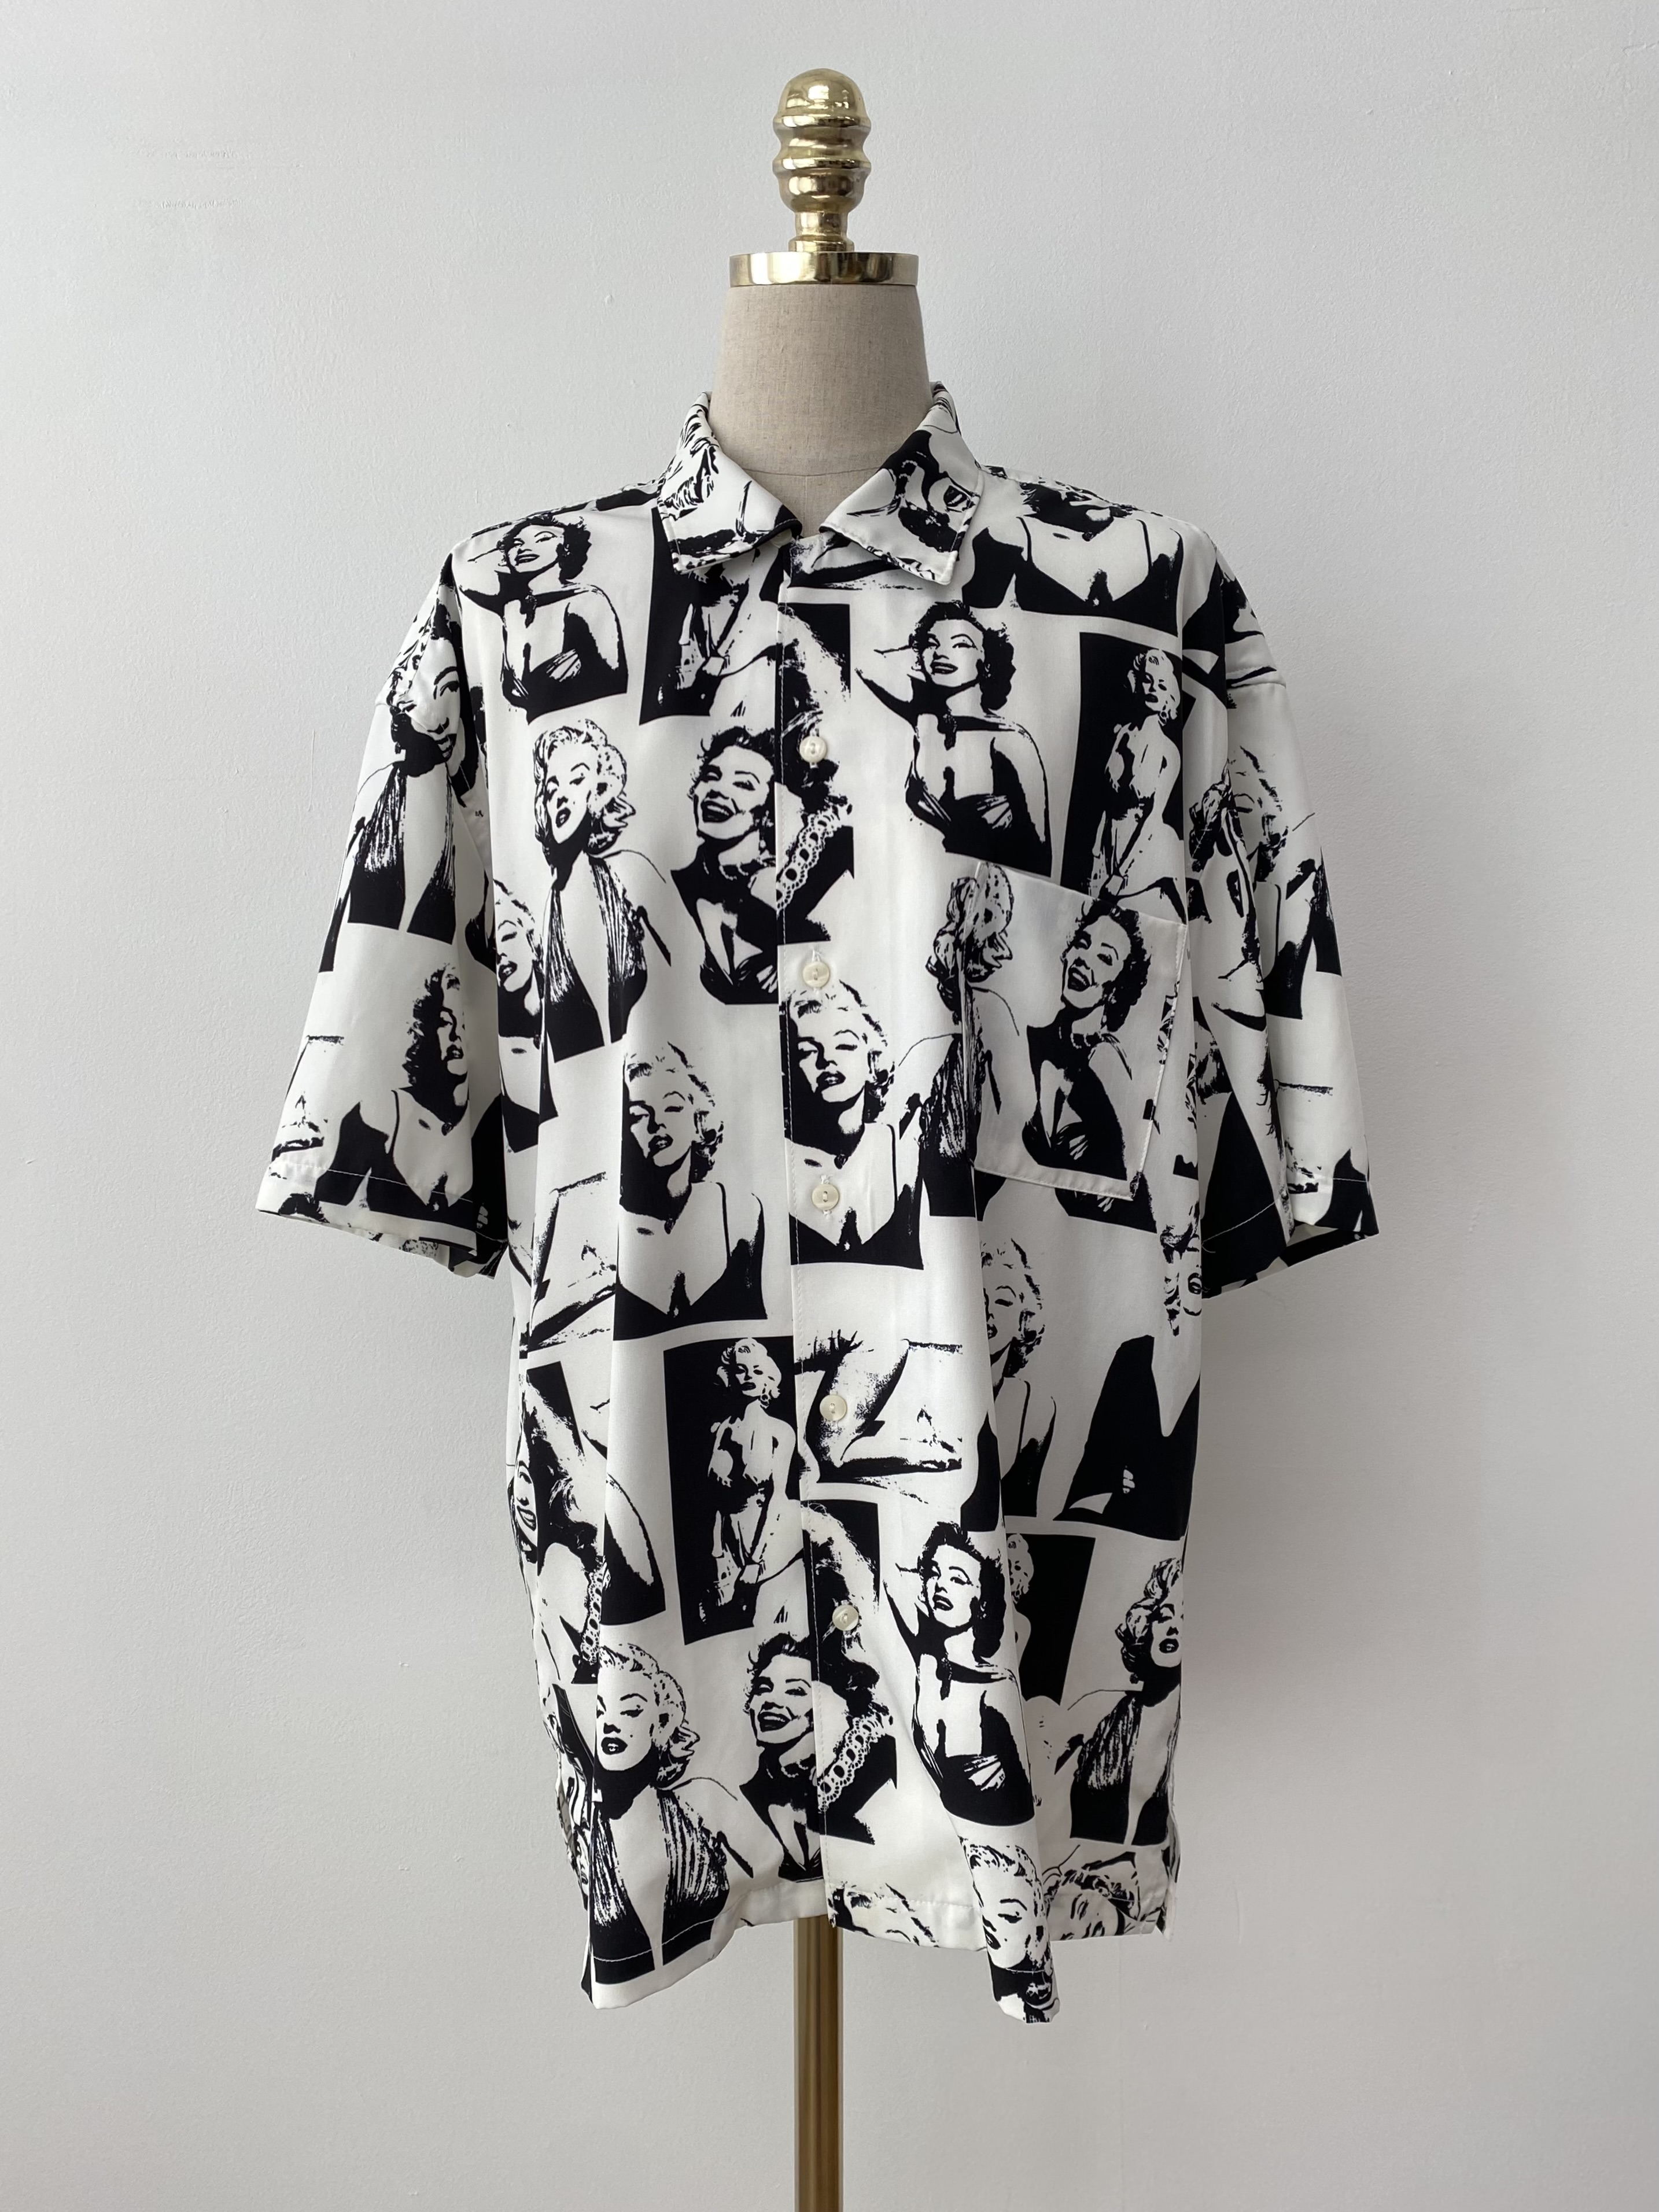 Marilyn Monroe printed short sleeve shirt